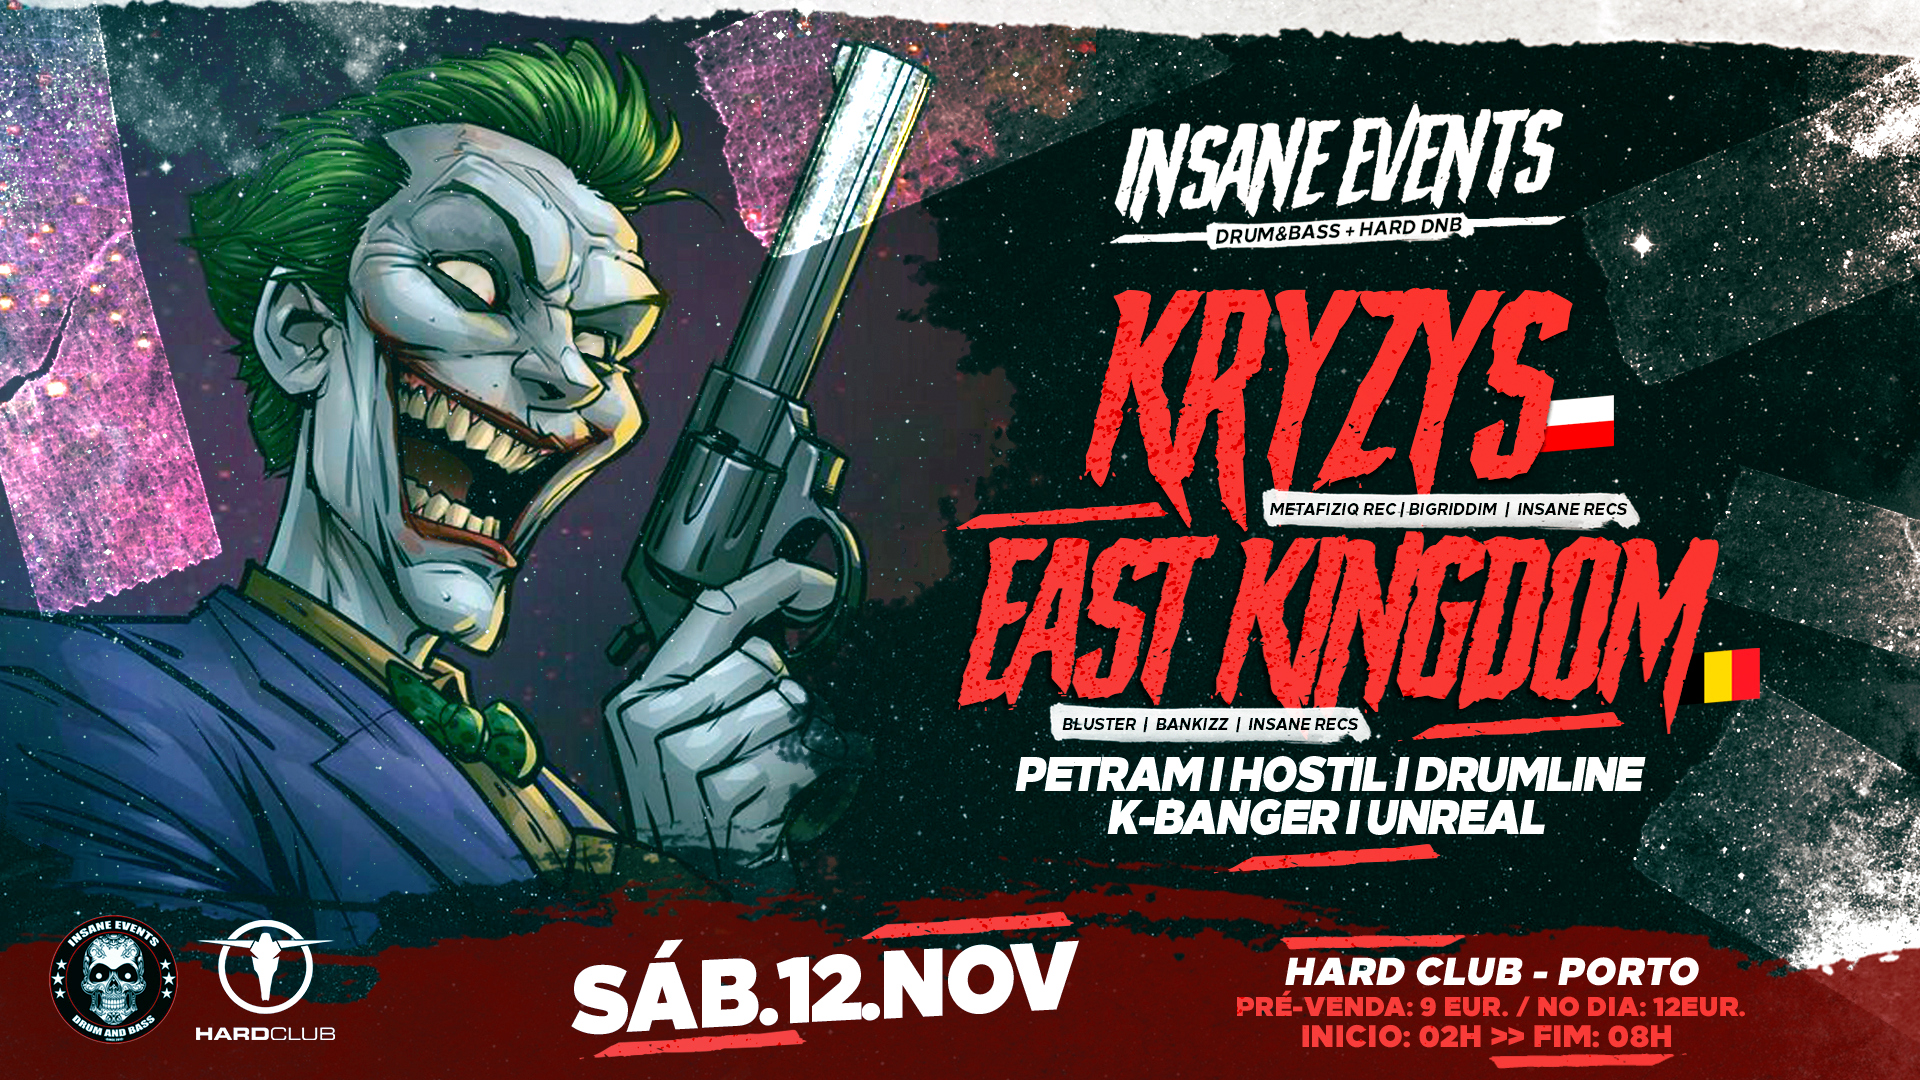 INSANE EVENTS invites KRYZYS EAST KINGDOM Hard Club - Porto